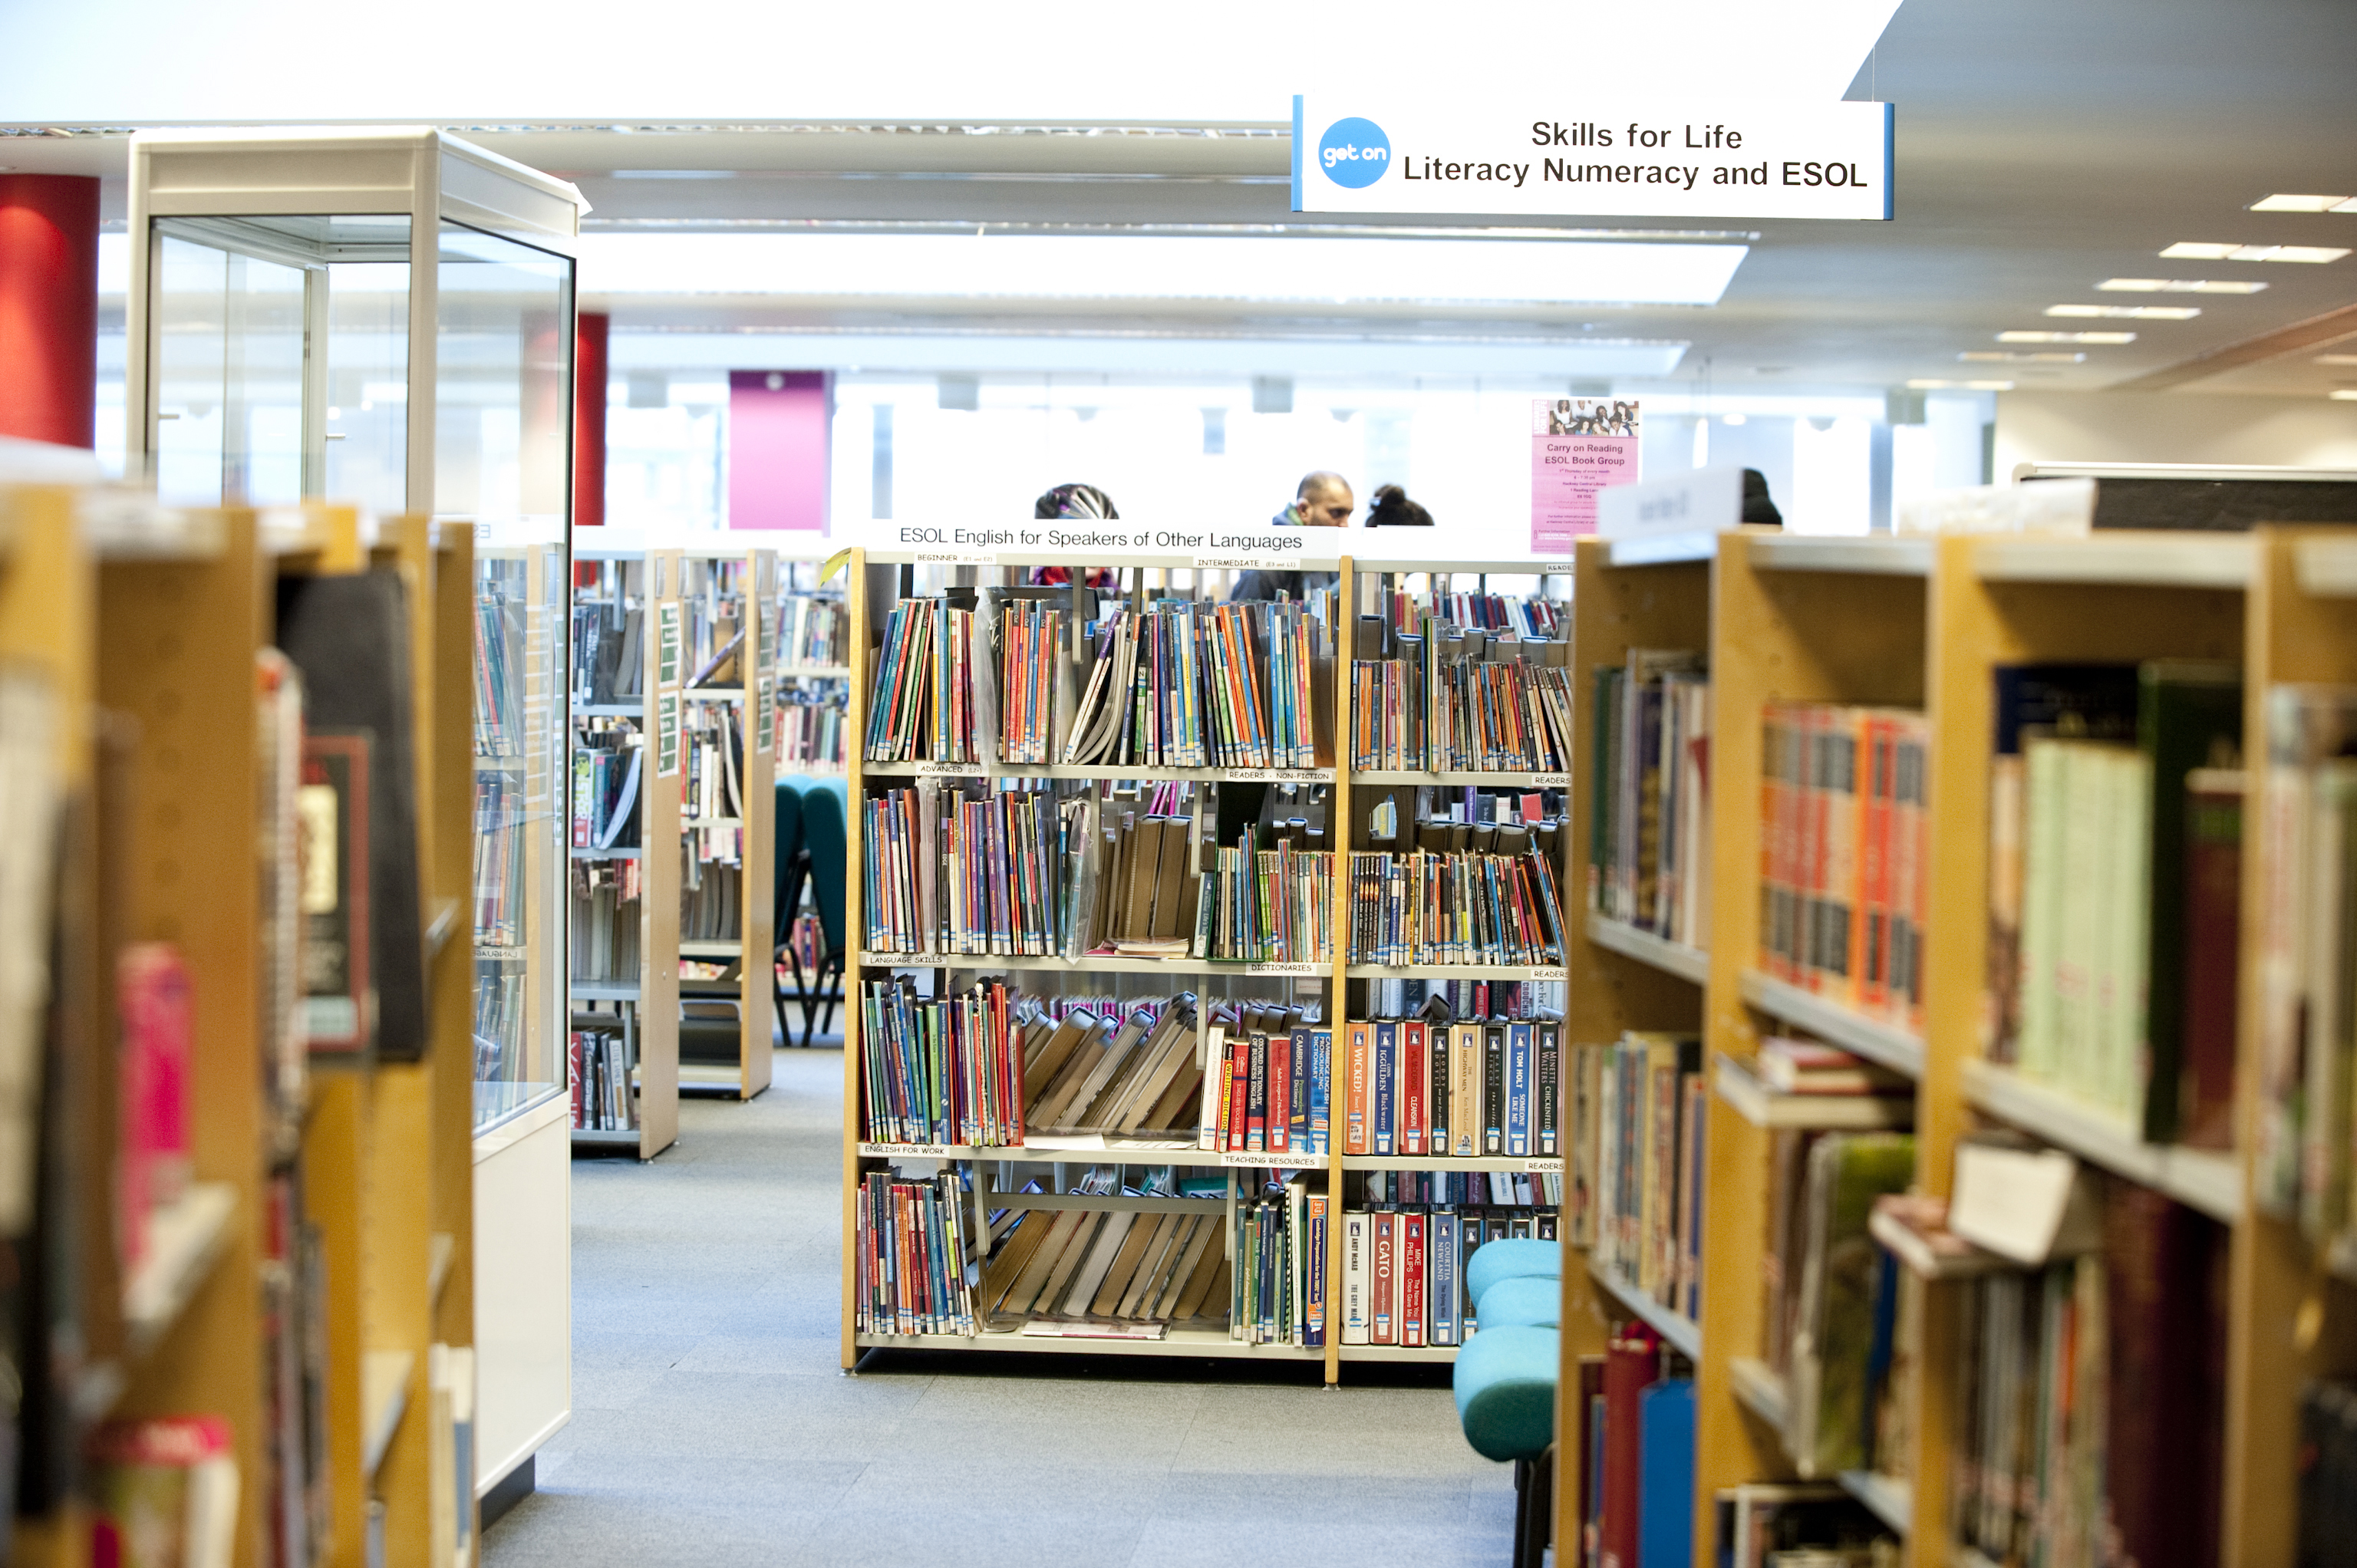 Bookshelves in Hackney Central library.